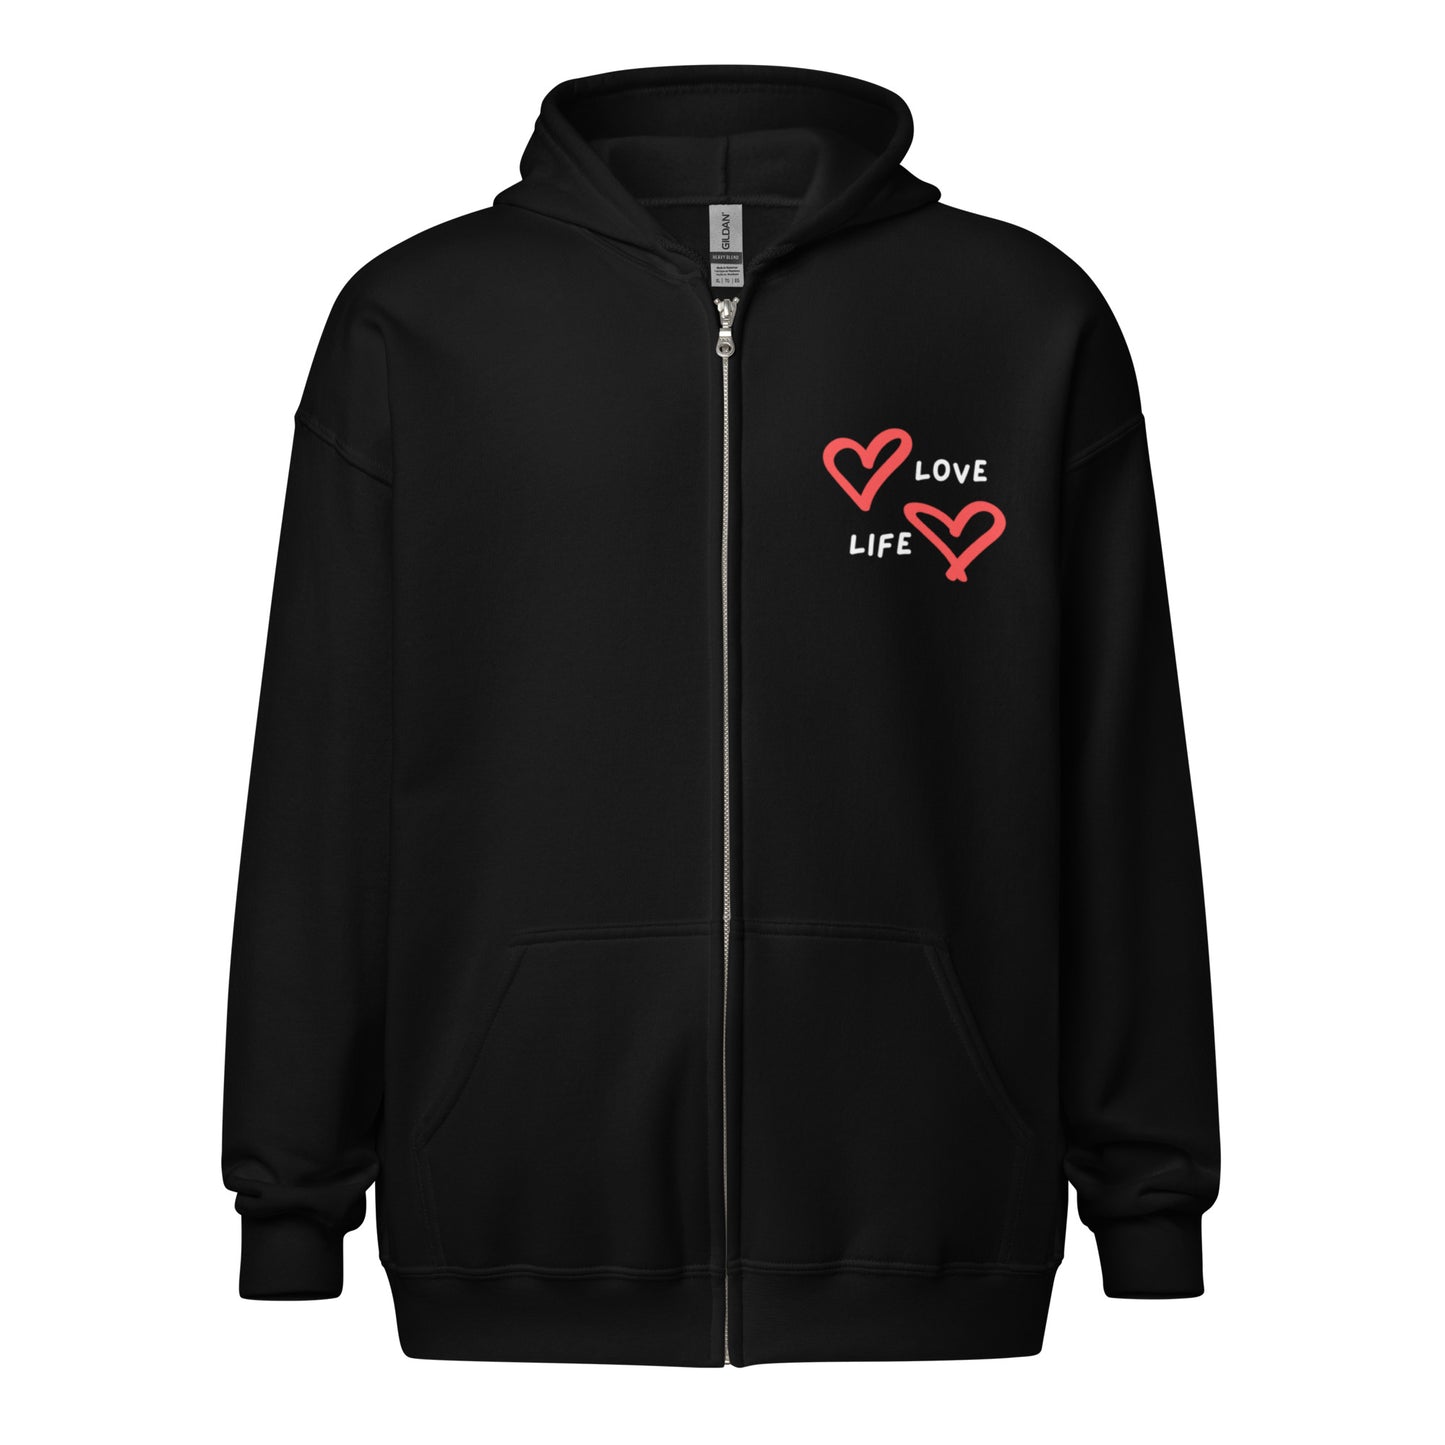 "love life" heavy zip hoodie